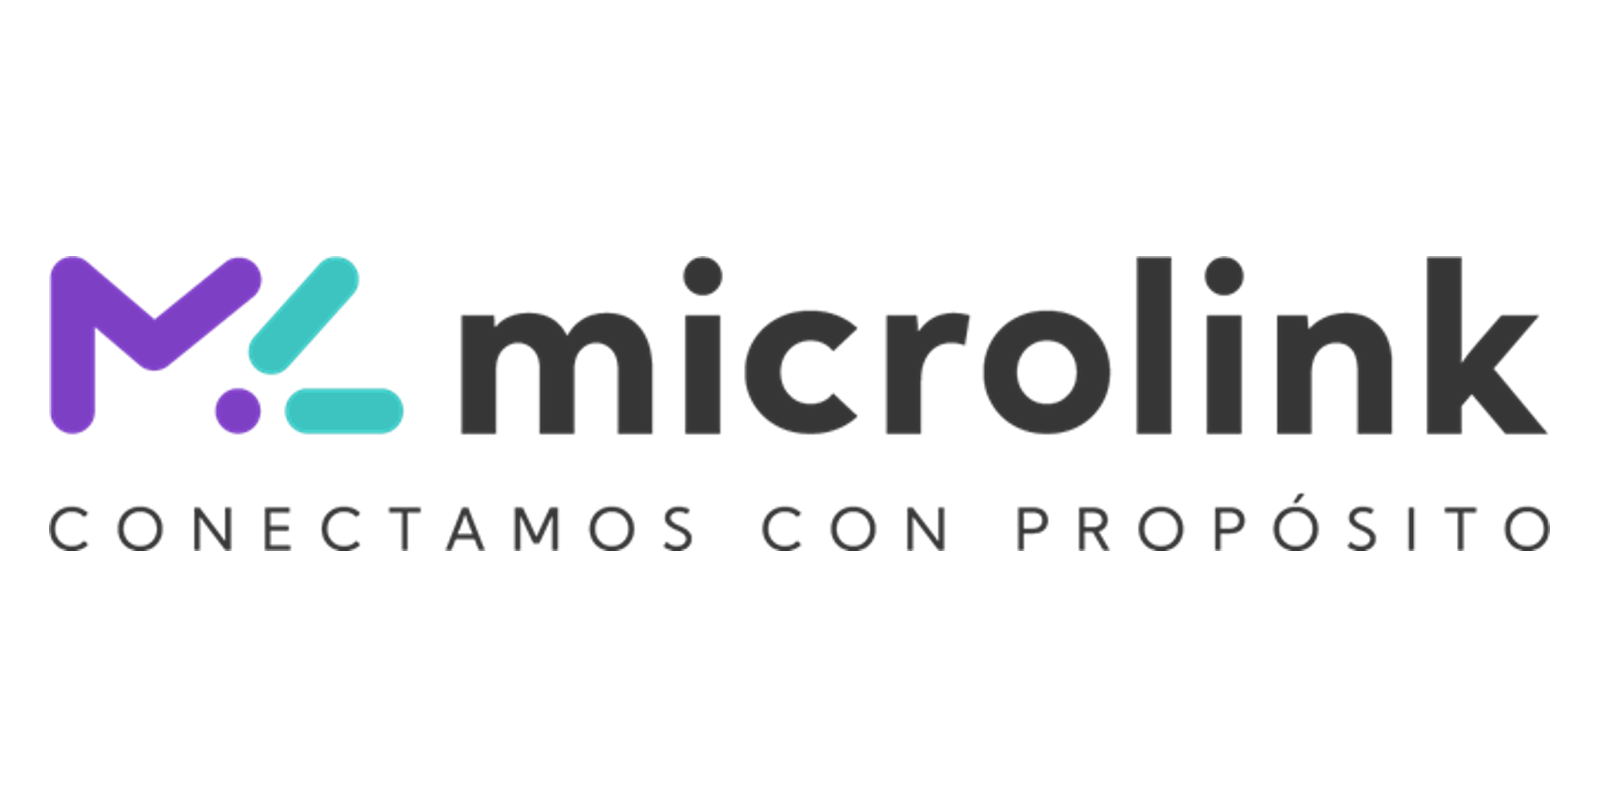 microlink logo.png